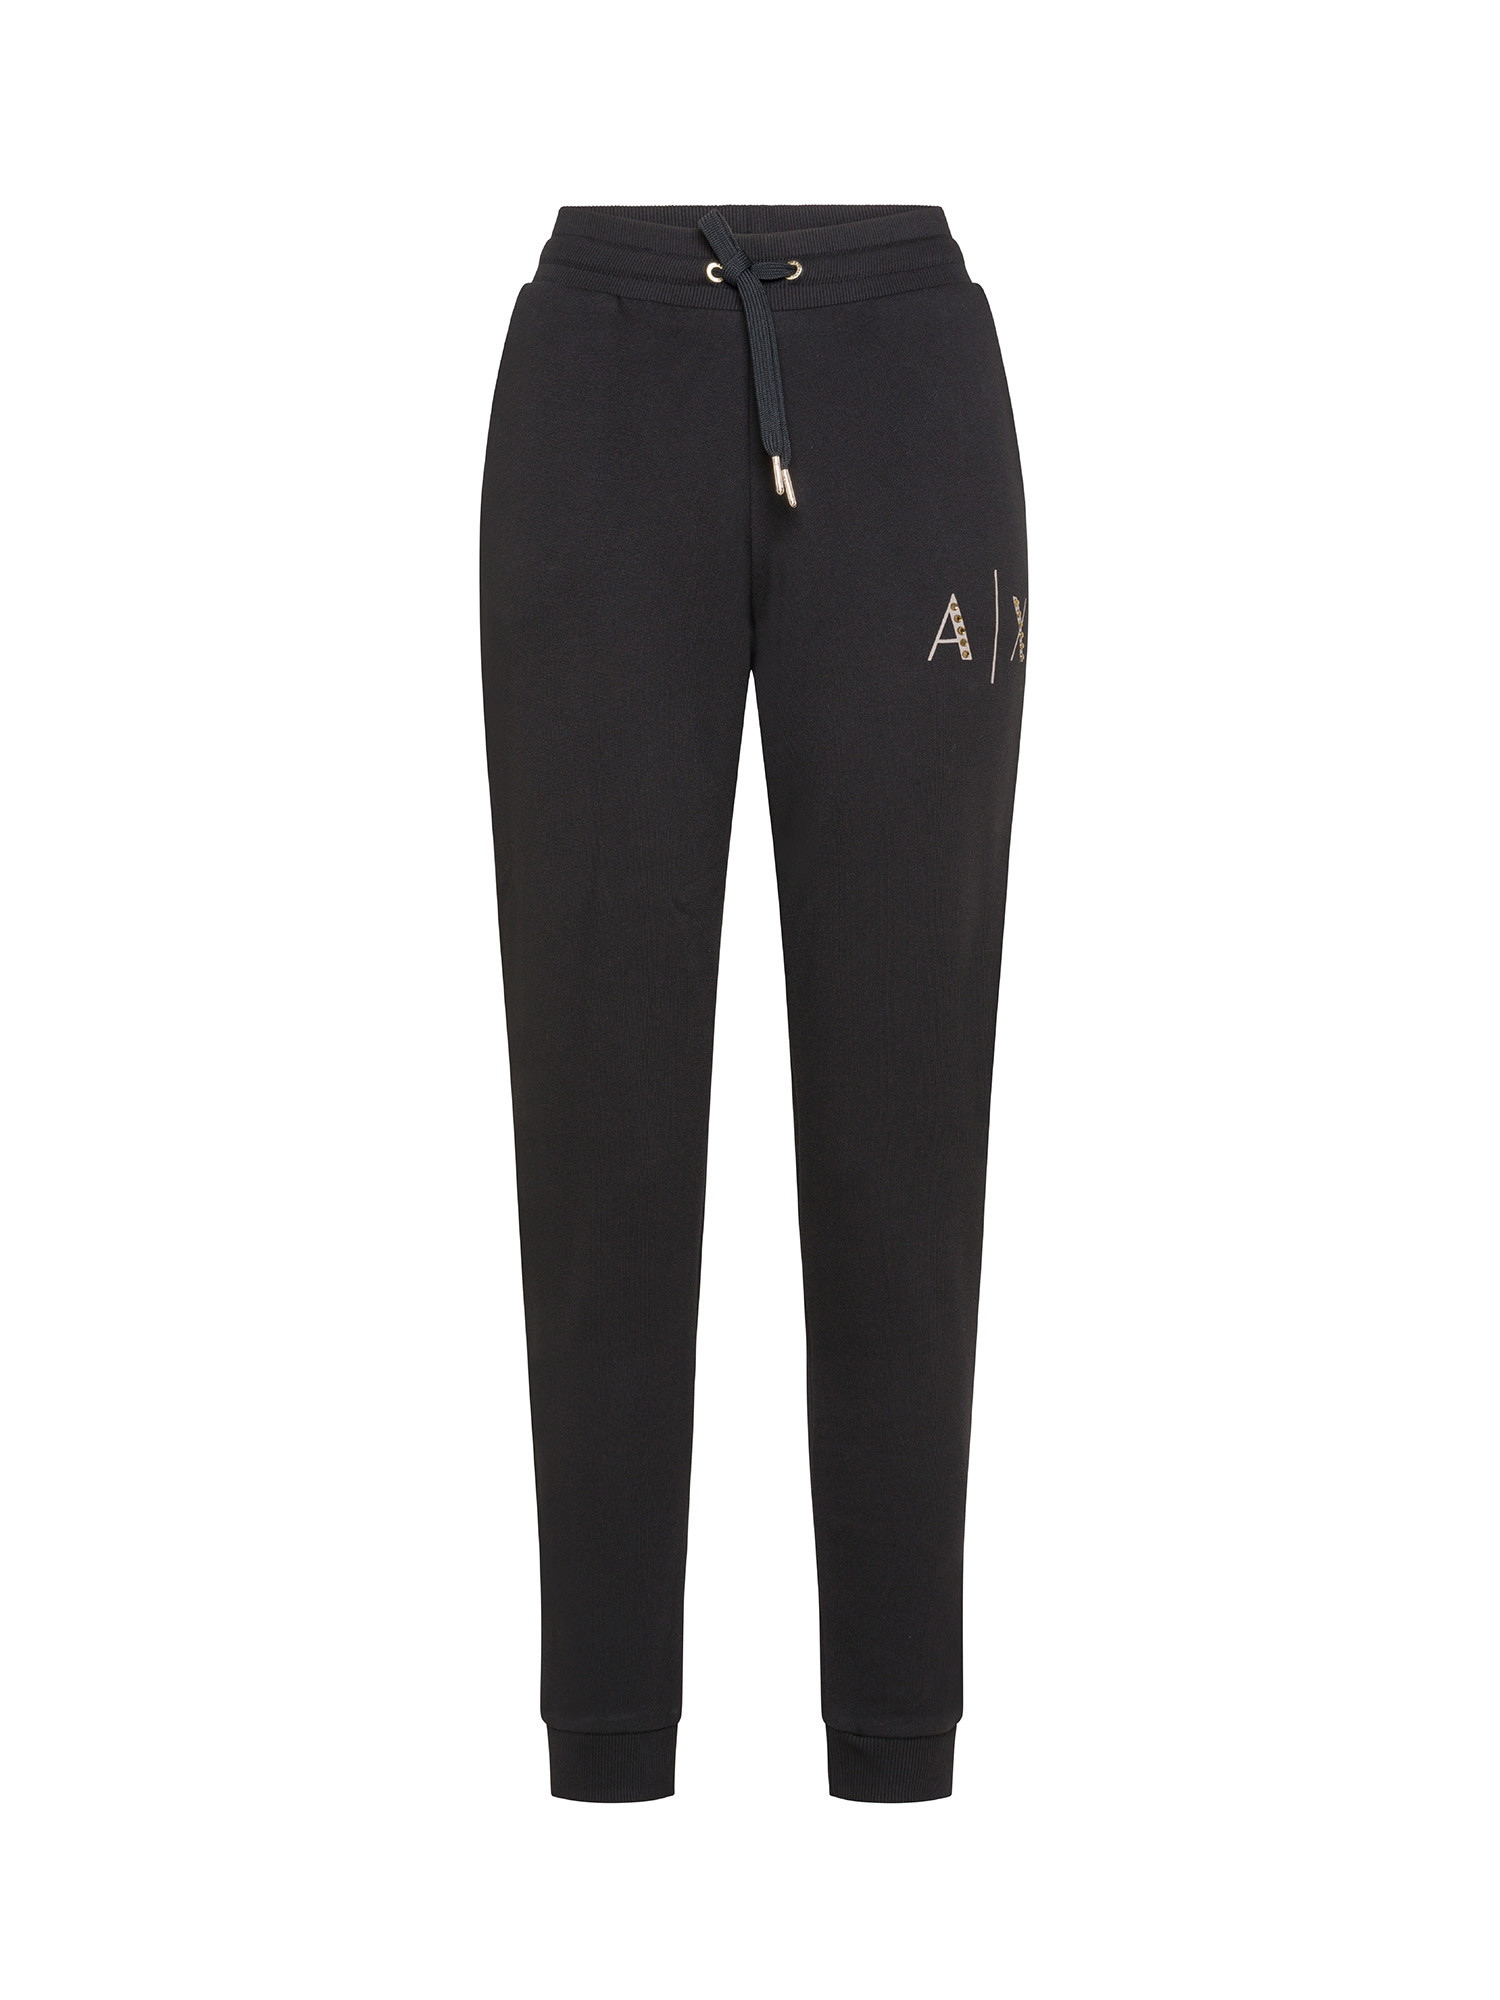 Armani Exchange - Sweatpants in cotton fleece, Black, large image number 0